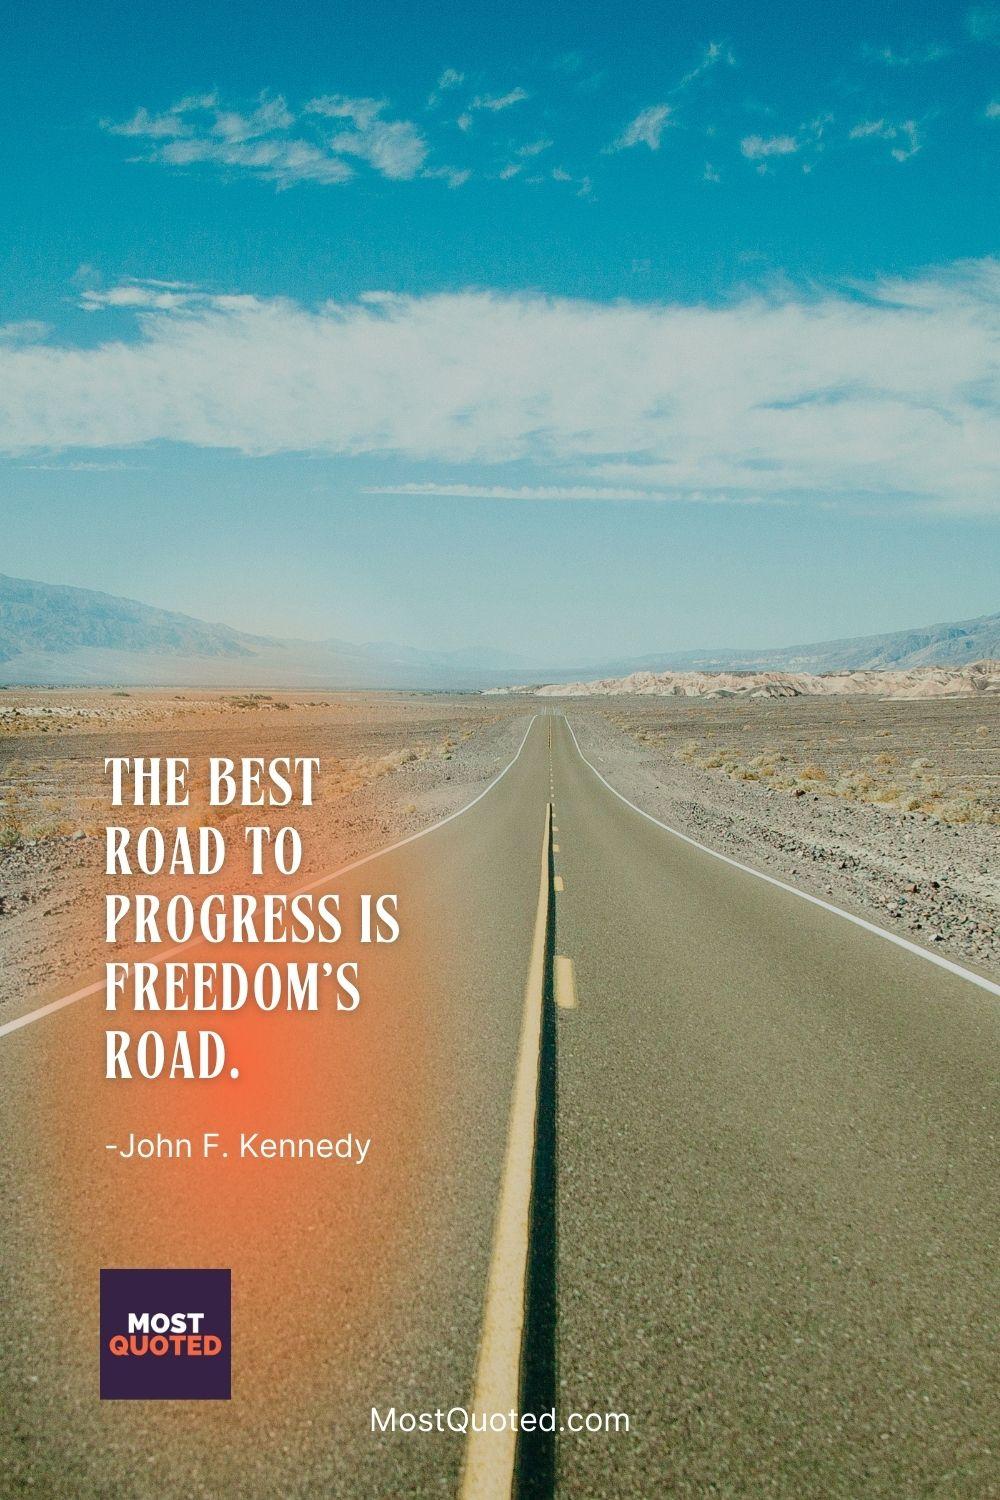 The best road to progress is freedom’s road. - John F. Kennedy